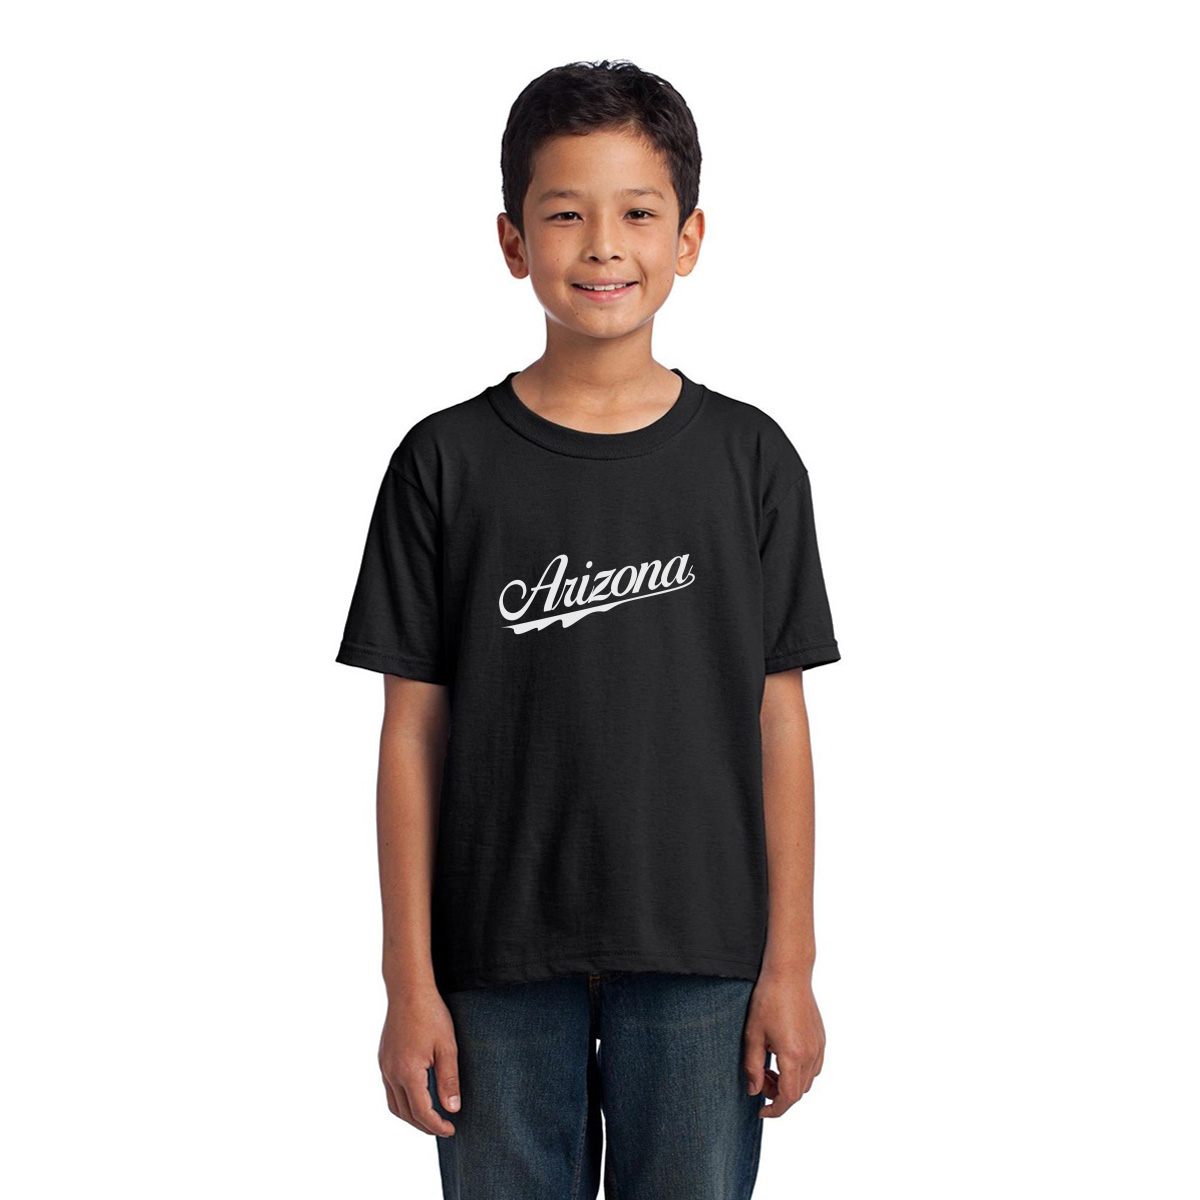 Arizona Kids T-shirt | Black